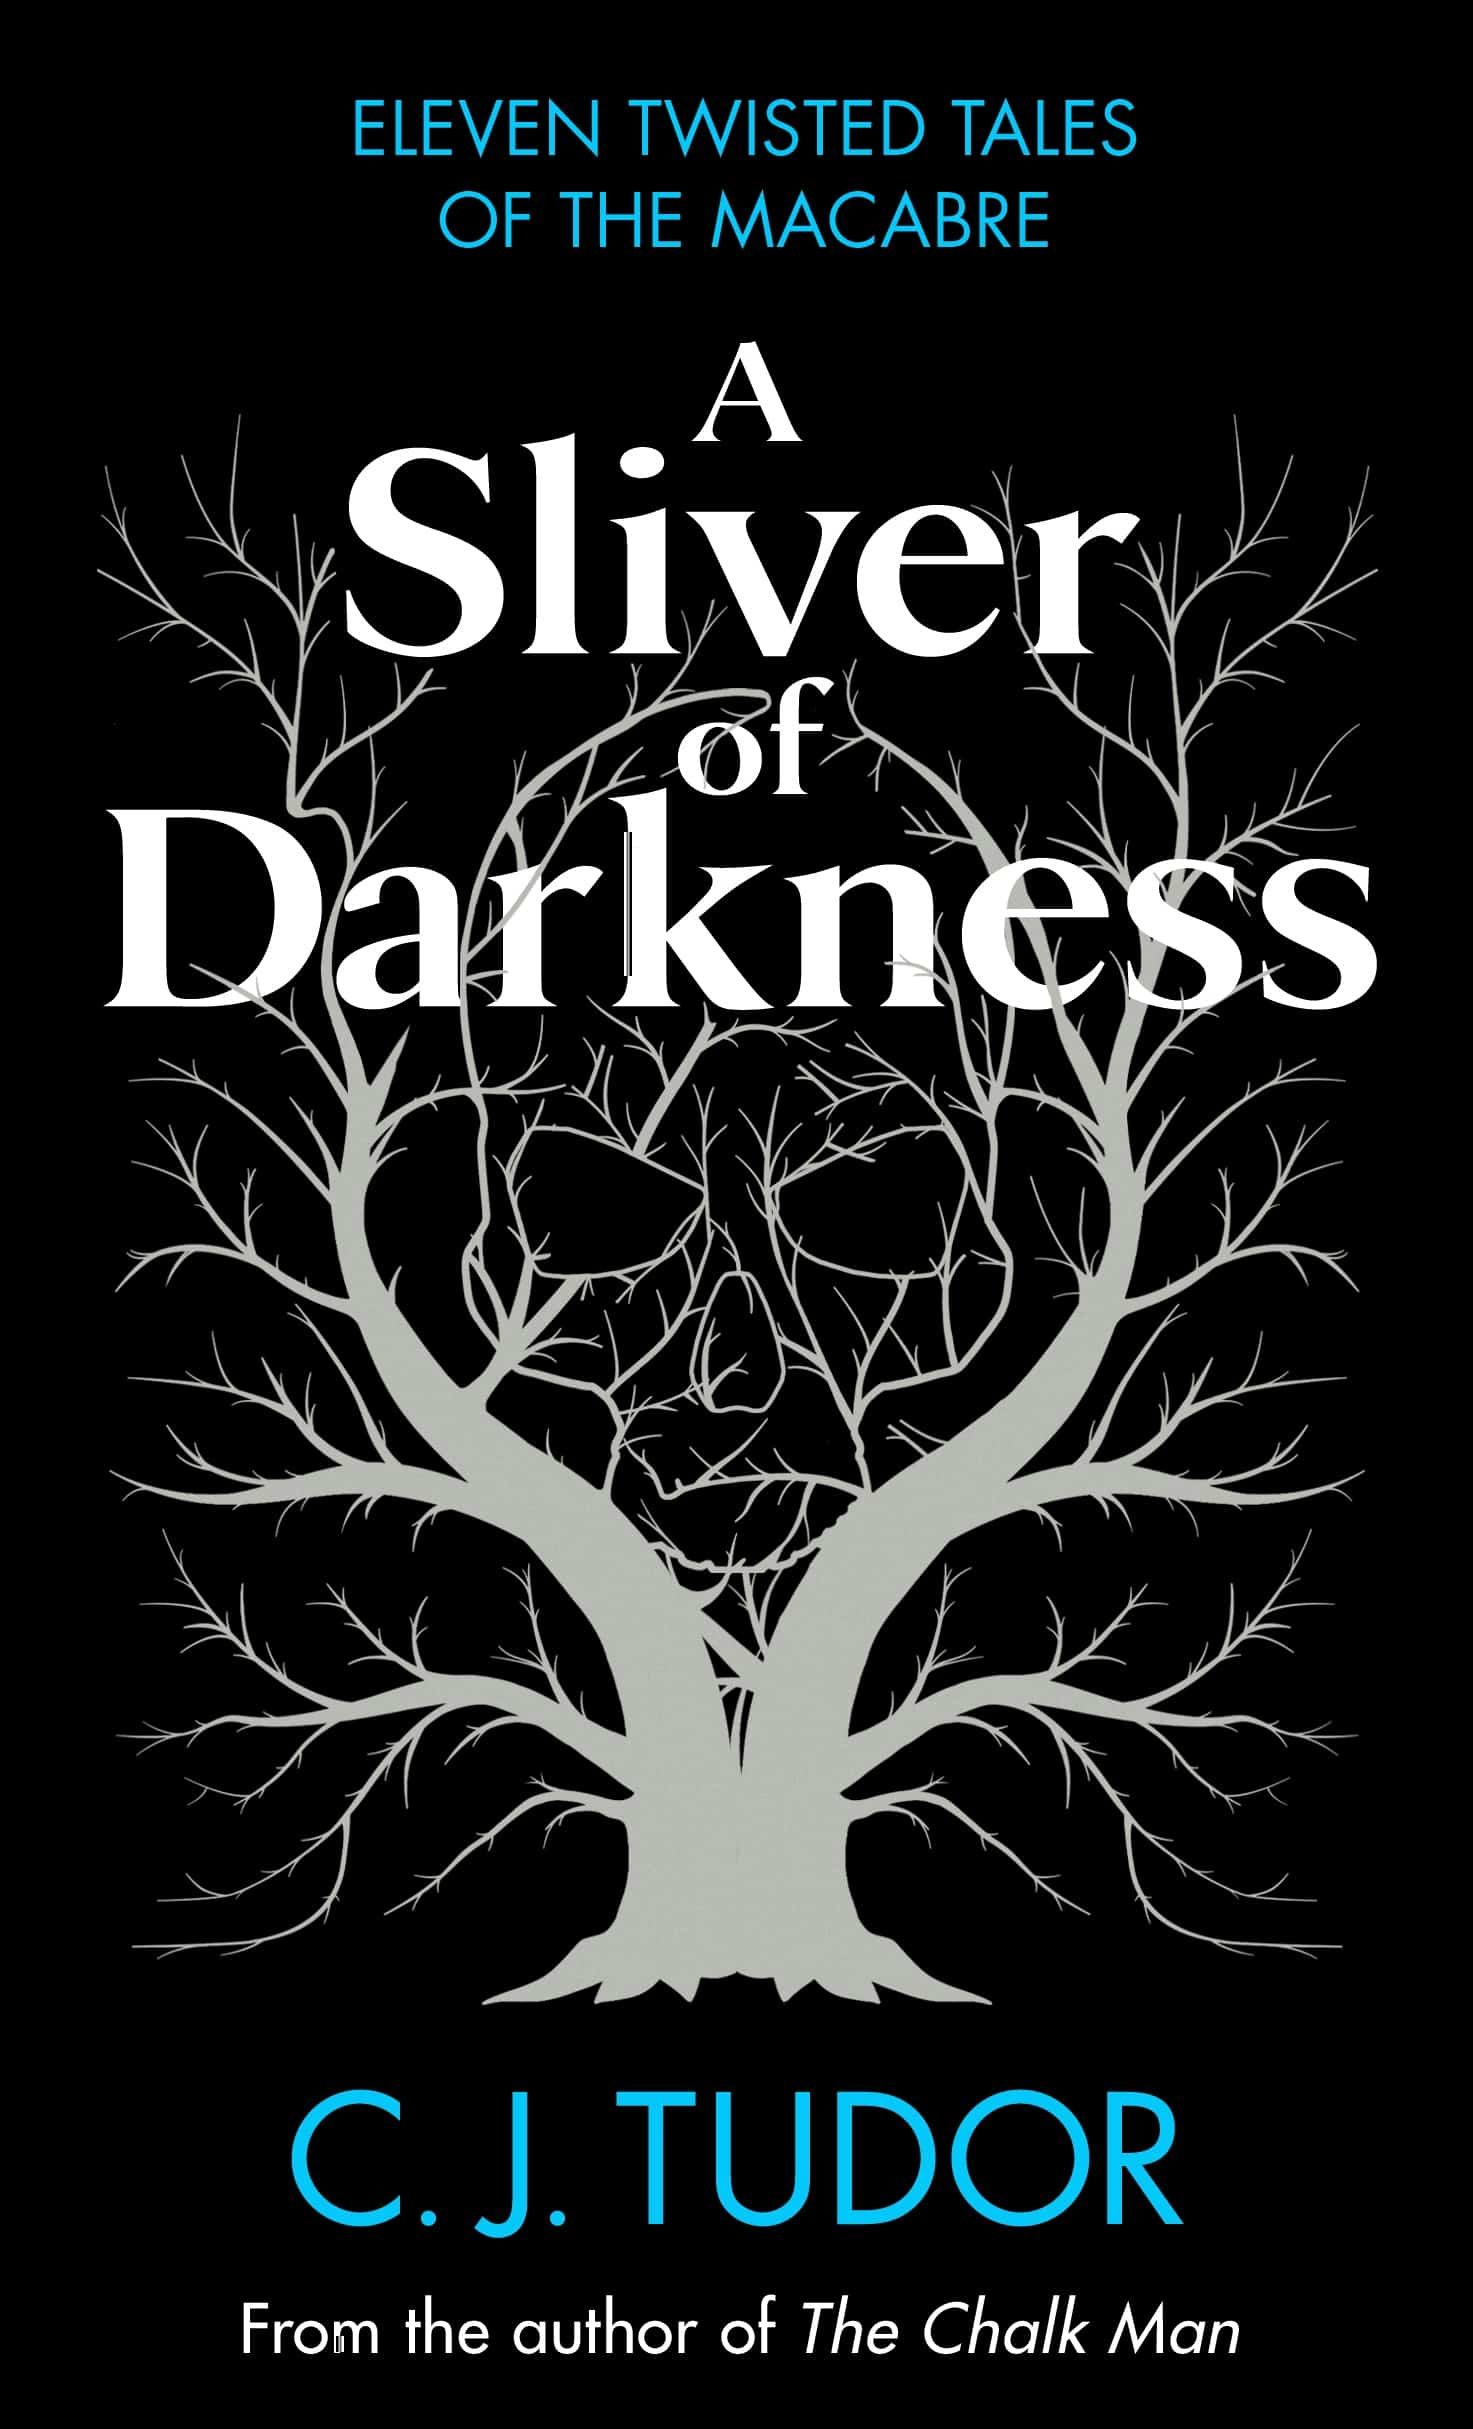 Book jacket of Sliver of Darkness by C. J. Tudor